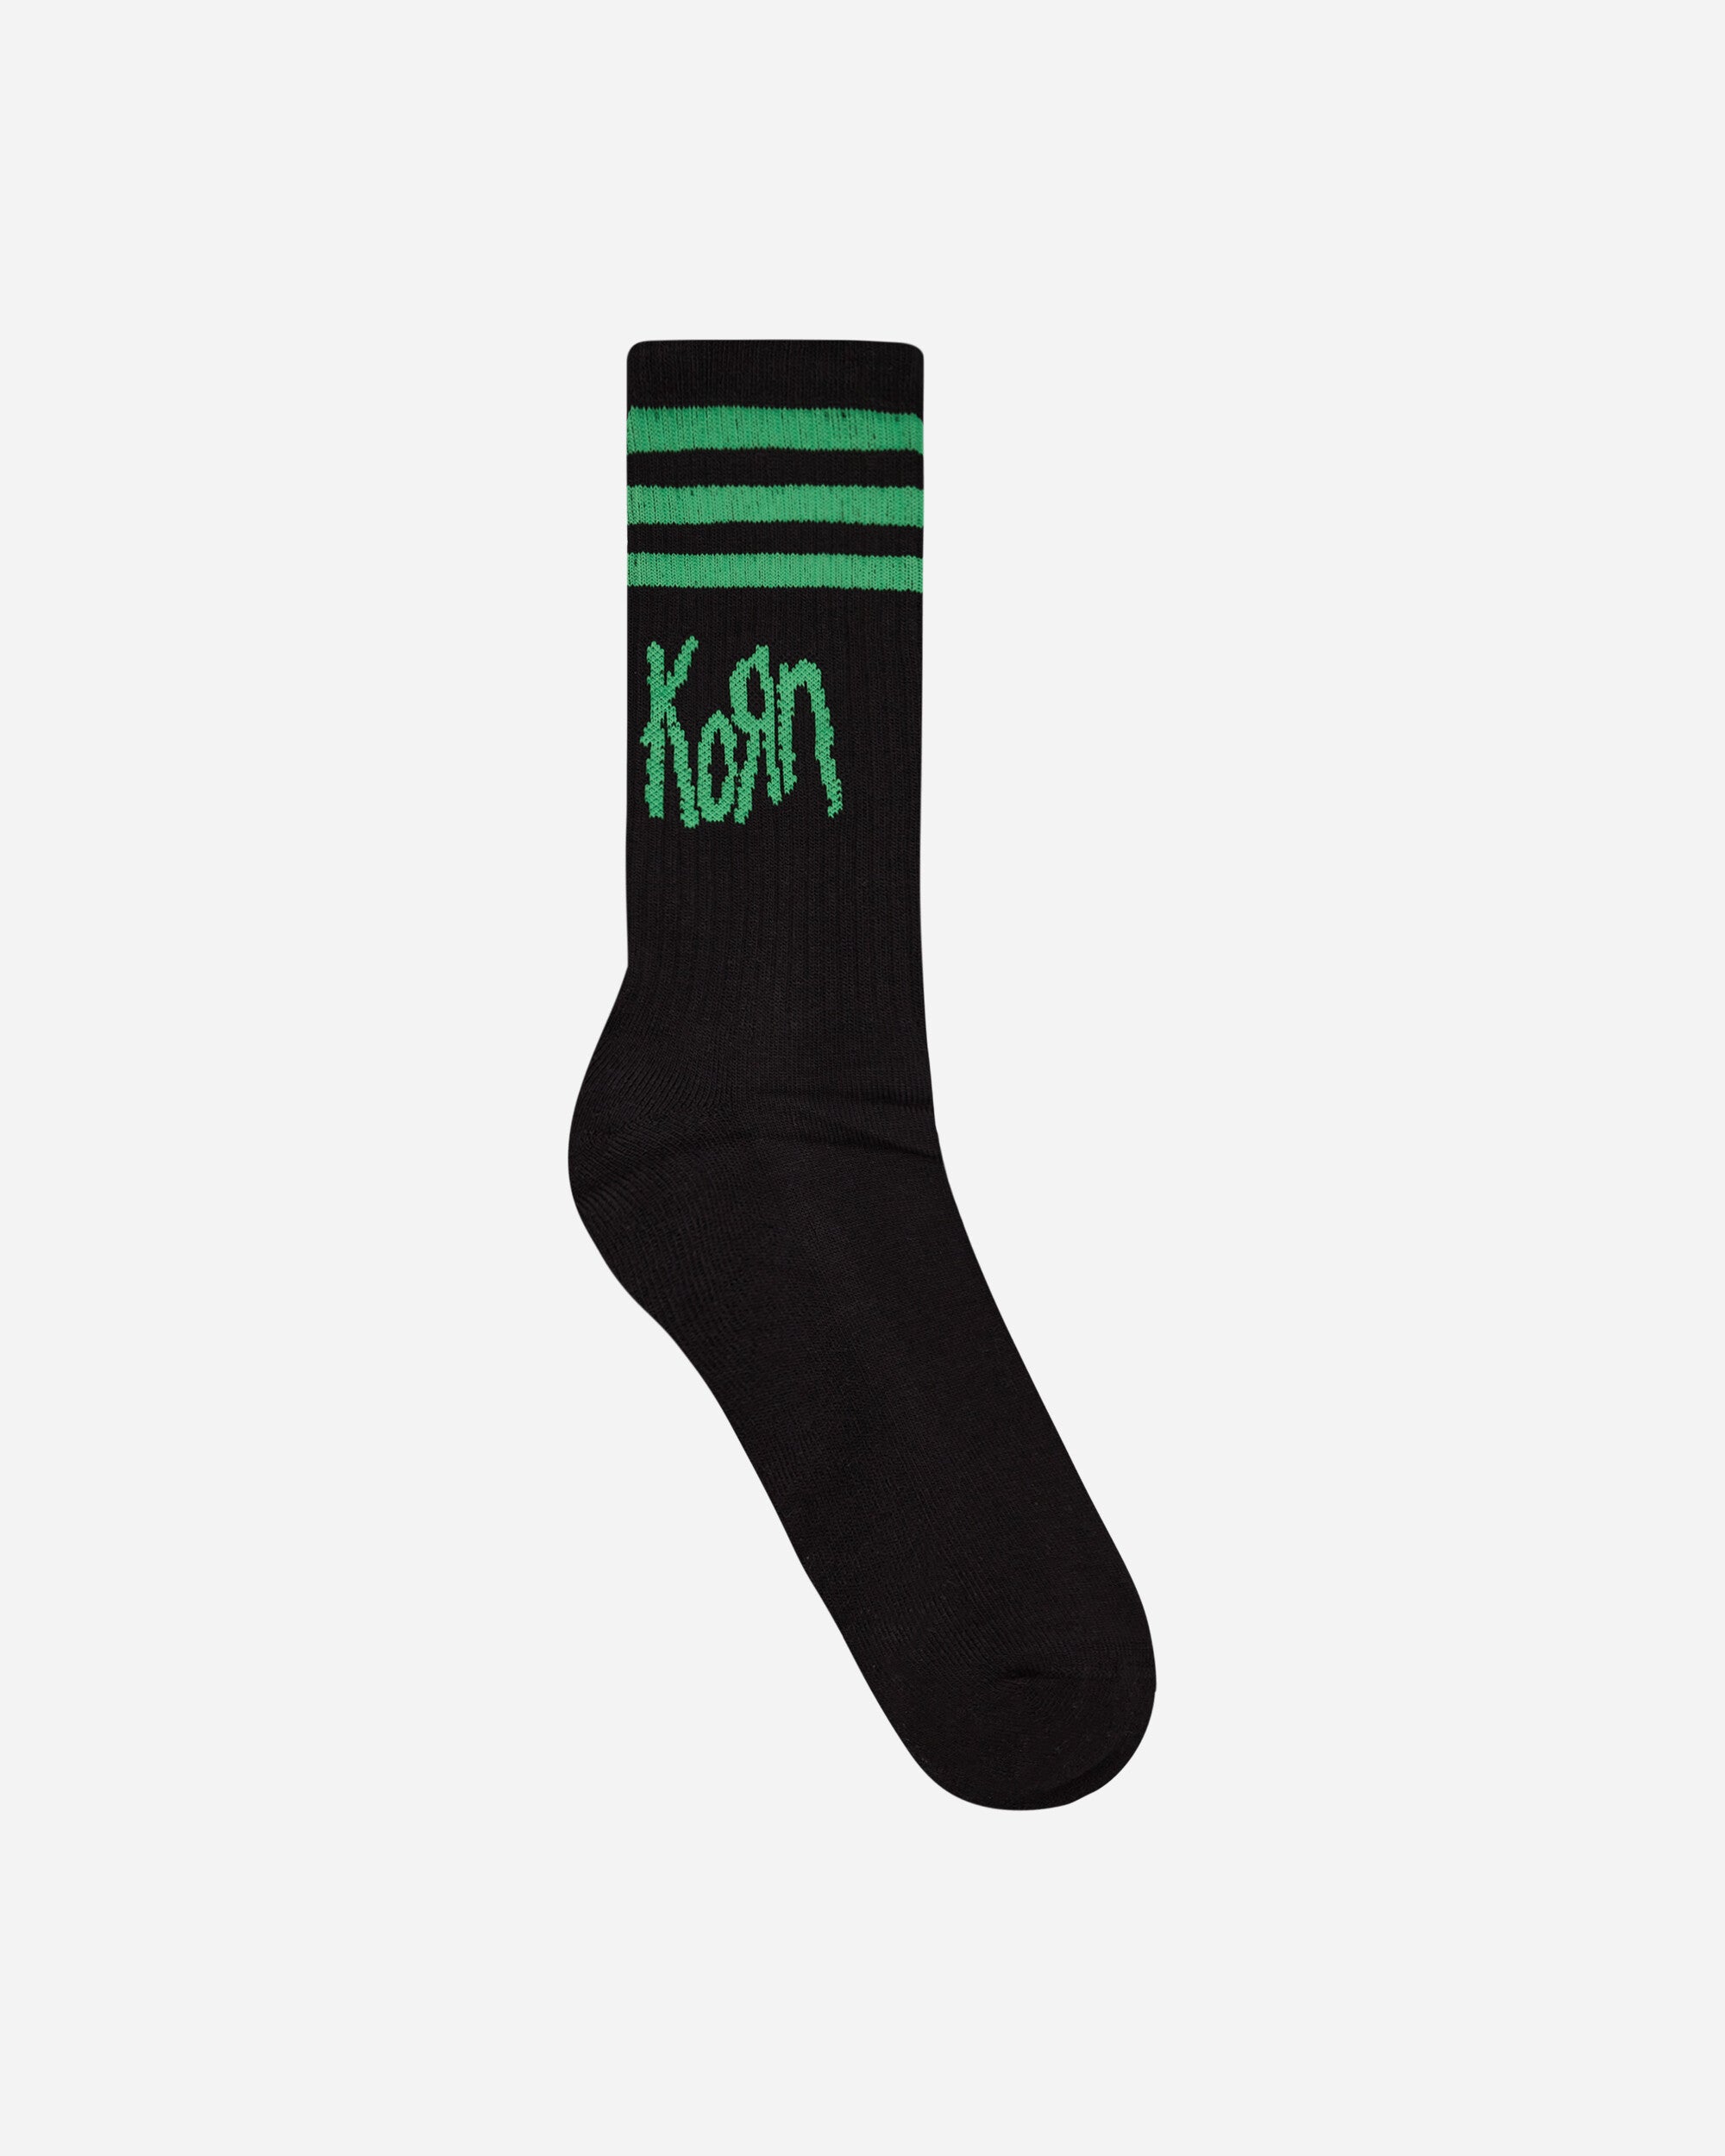 adidas Korn Socks Off White/Black Underwear Socks IW7522